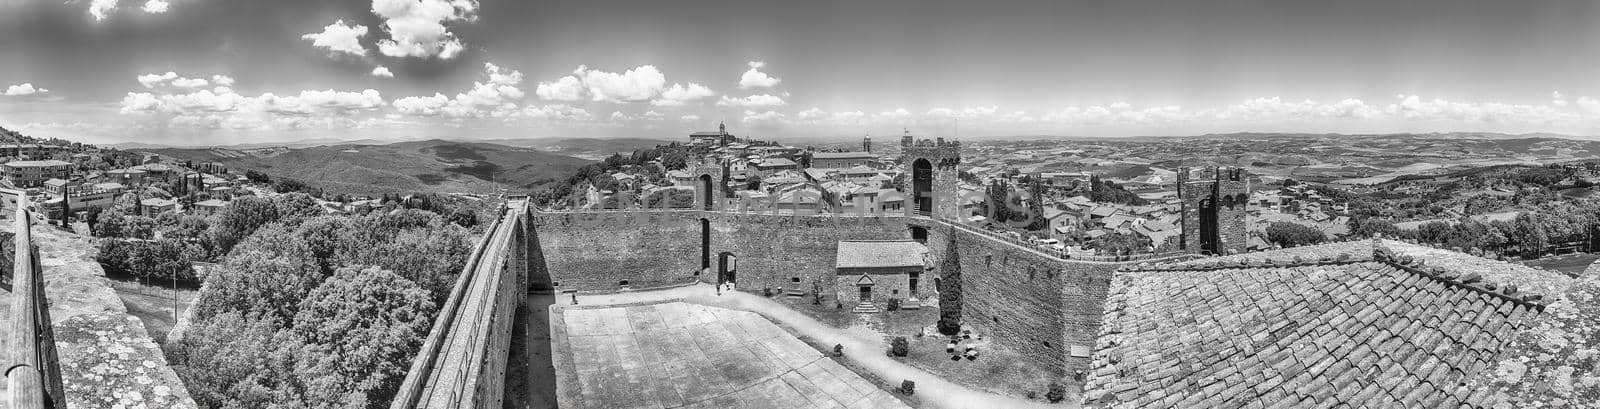 Medieval italian fortress, iconic landmark in Montalcino, Tuscany, Italy by marcorubino